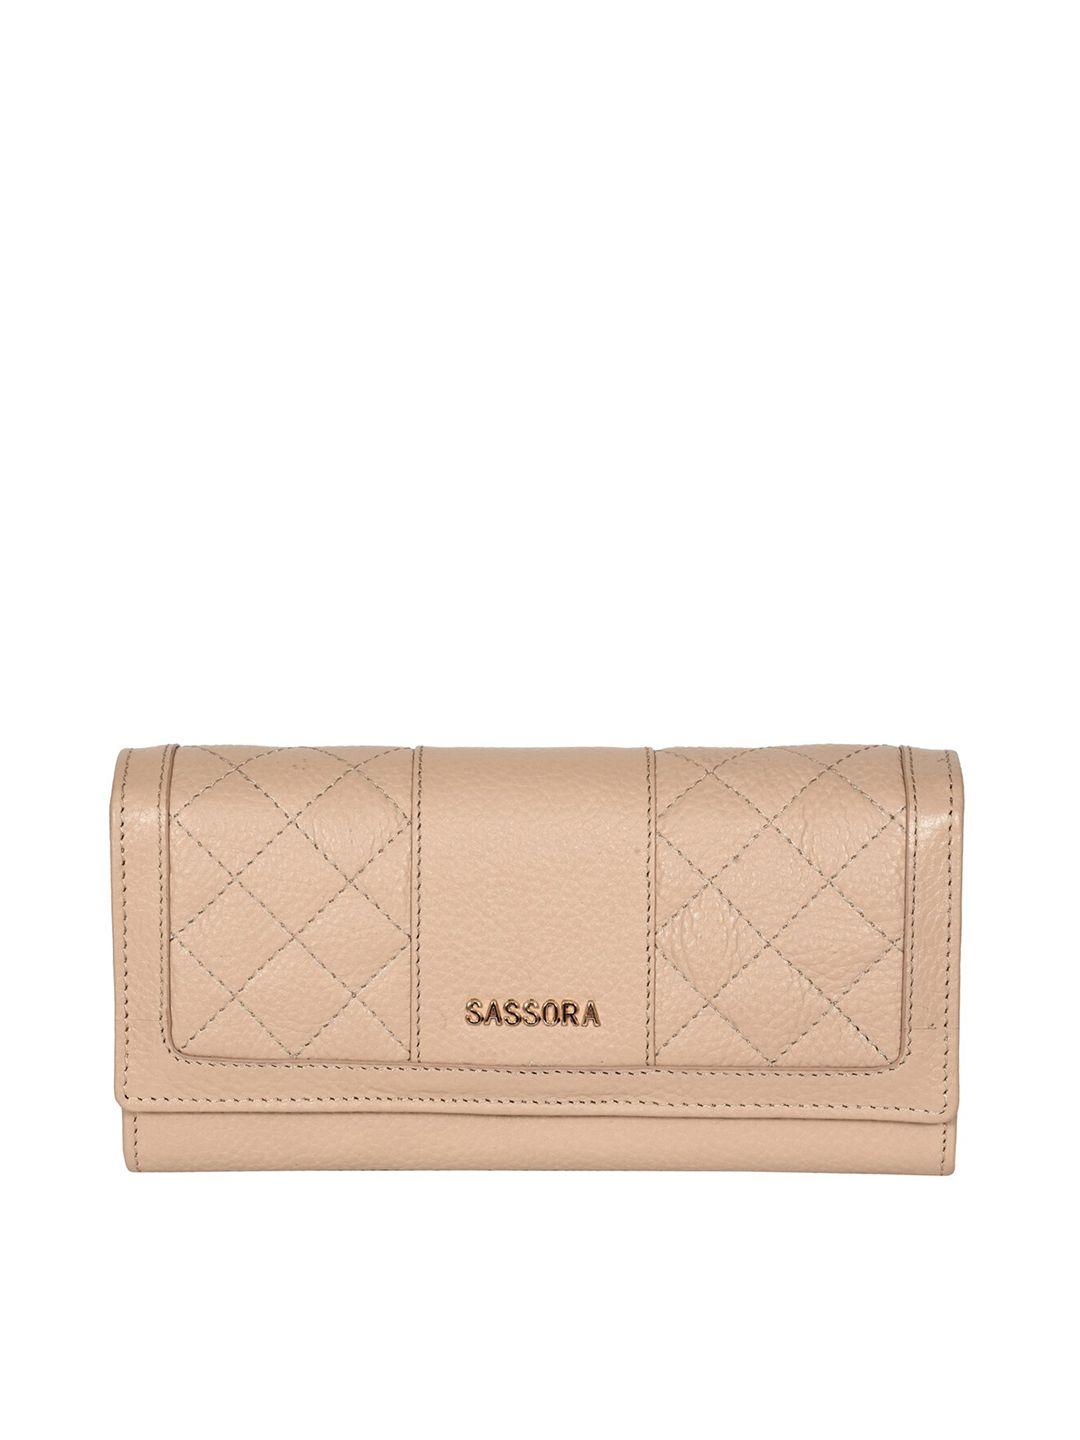 sassora women rfid leather purse